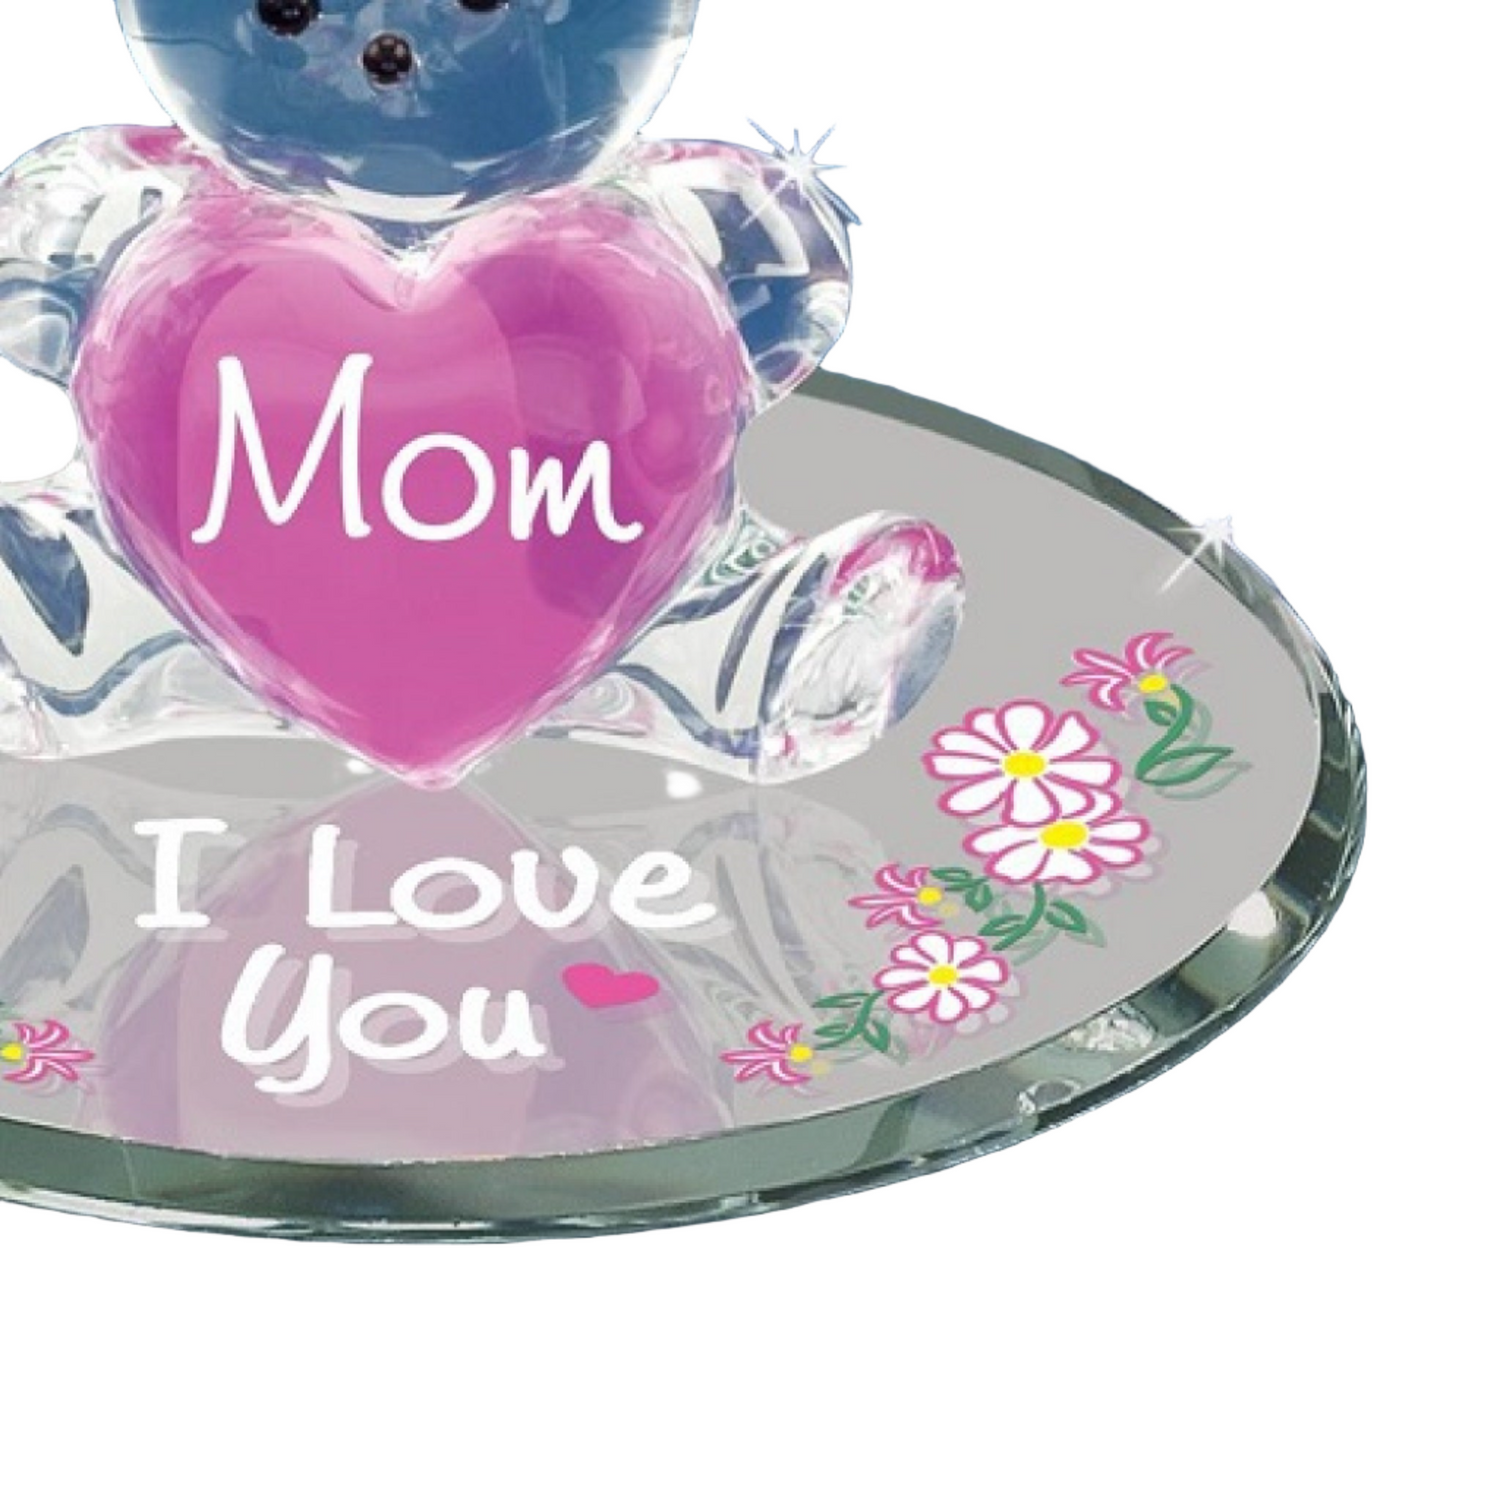 Glass Baron "Mom, Love You" Bear Figurine